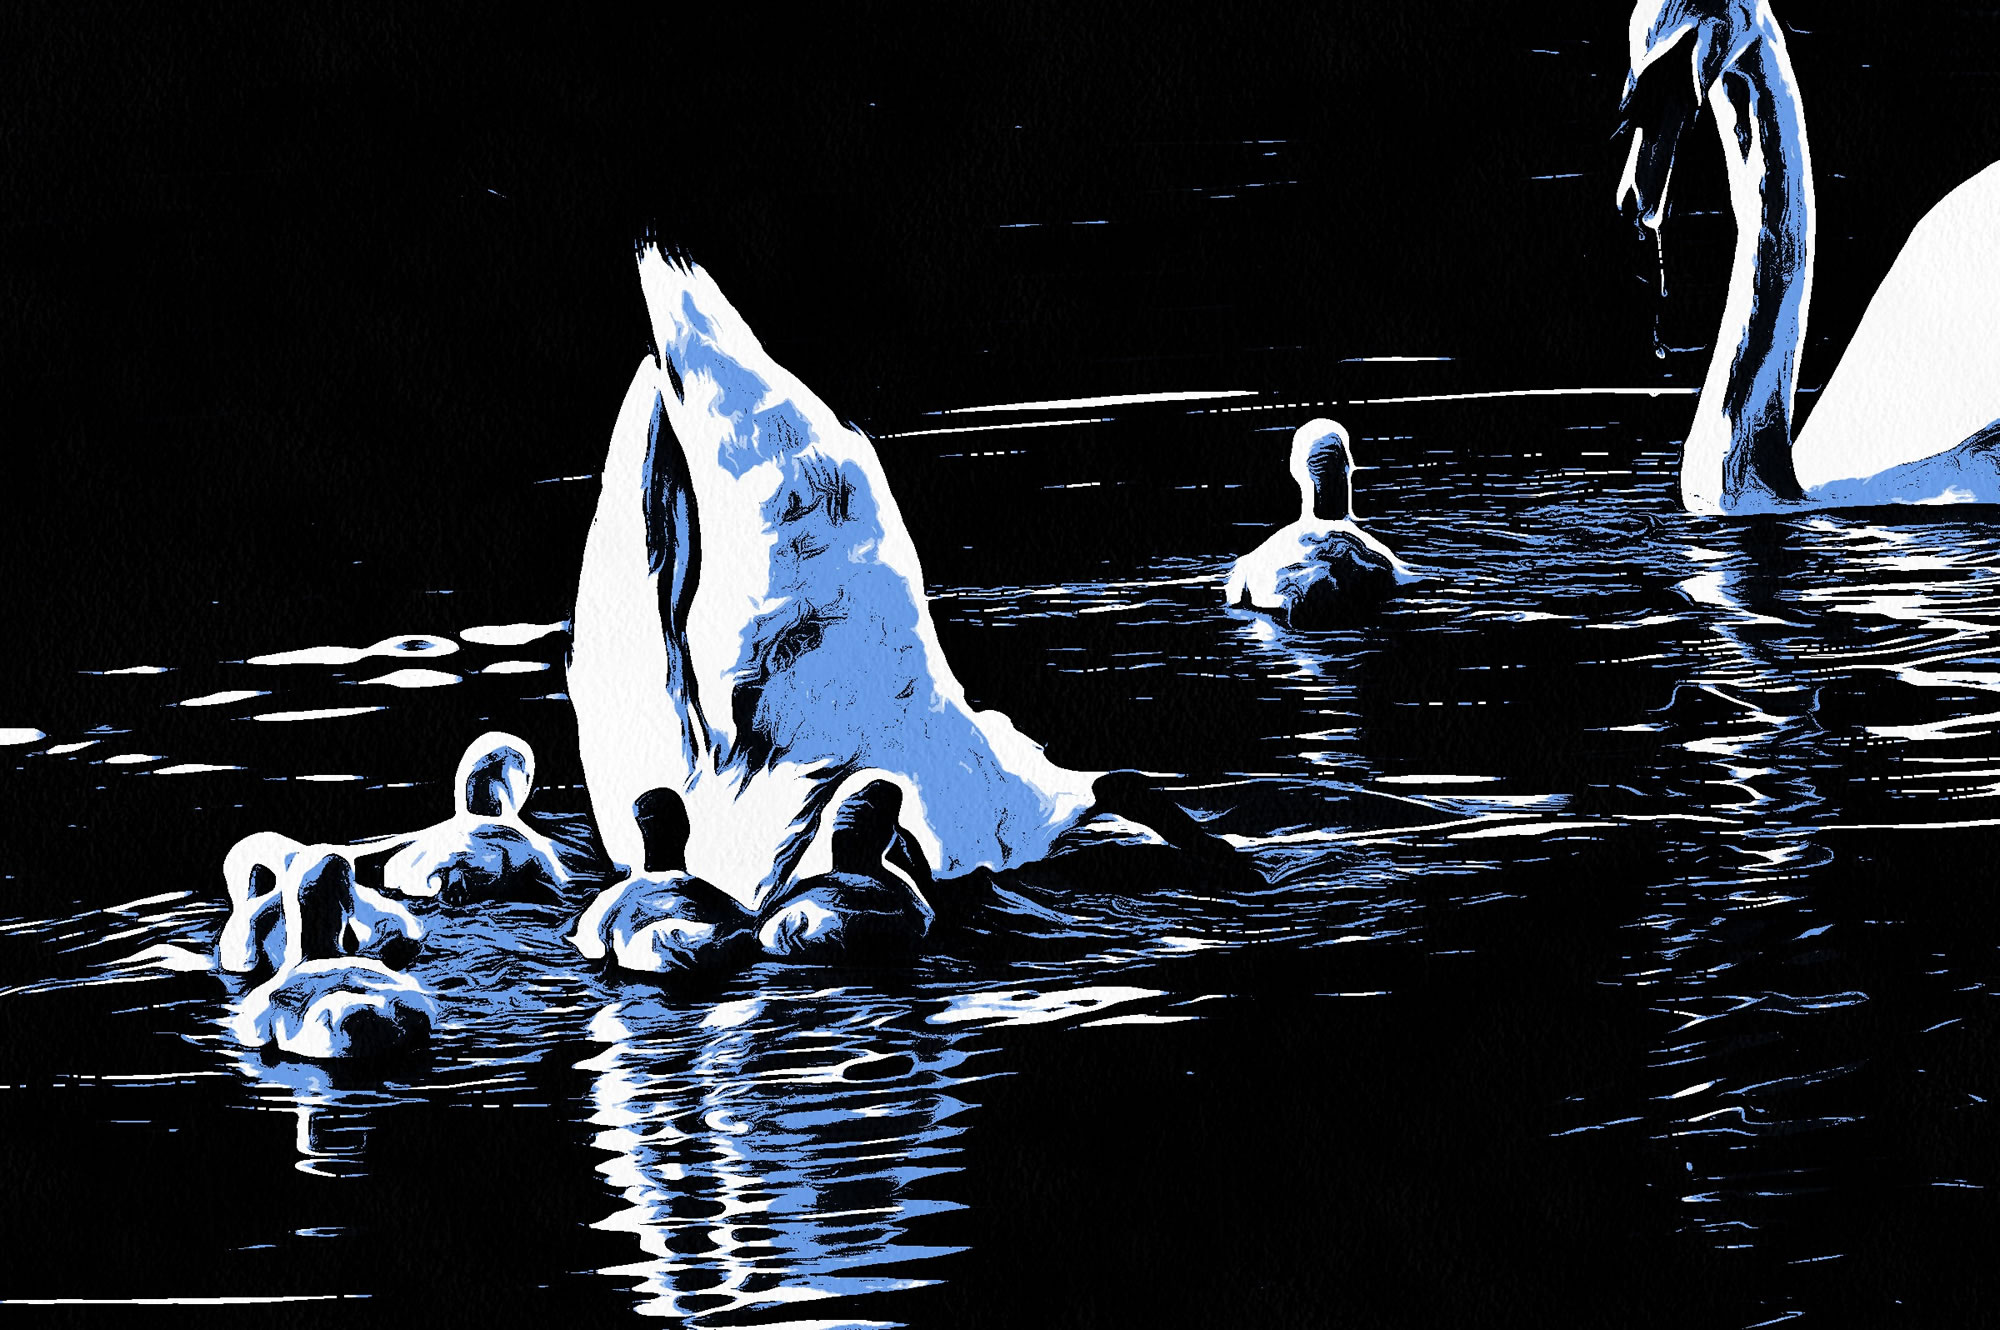 Swan art picture 62 - art image 7